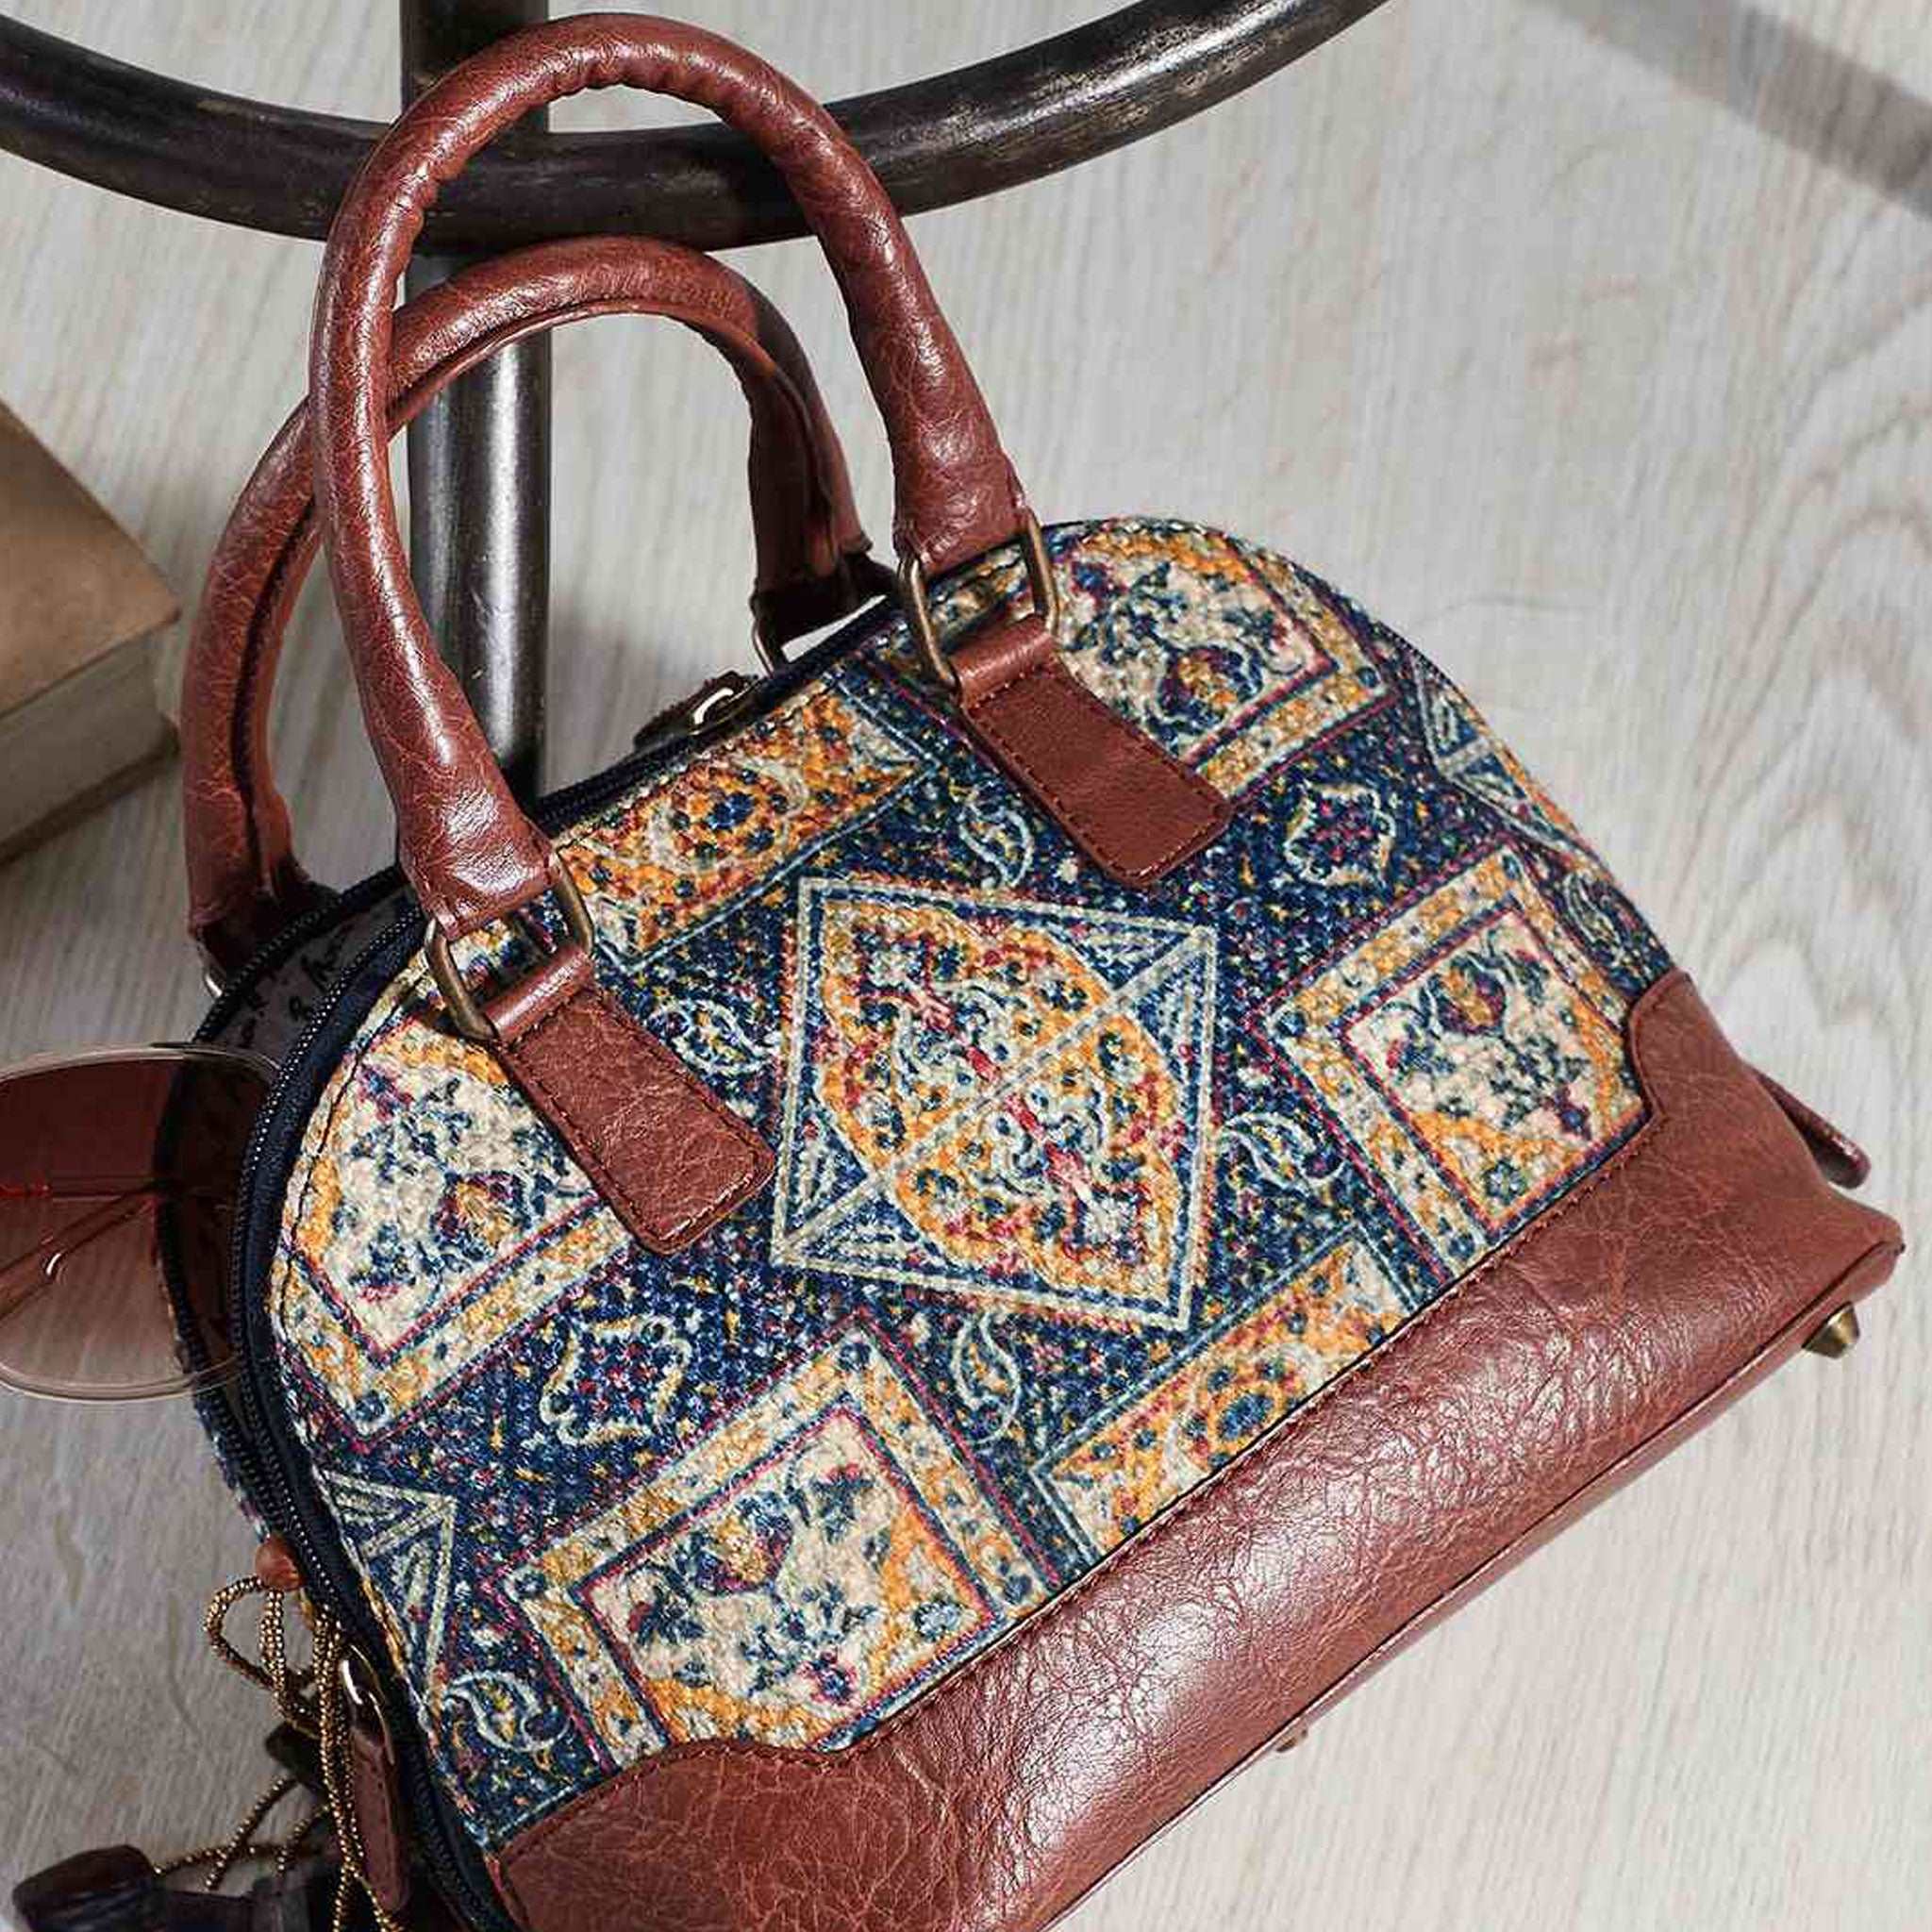 Mona B Canvas Samll Vintage Handbag, Shoulder Bags For Shopping Travel With Stylish Design For Women (Chocolate, Kilim) - M-7006 - Handbag by Mona-B - Backpack, Flash Sale, Flat40, Sale, 